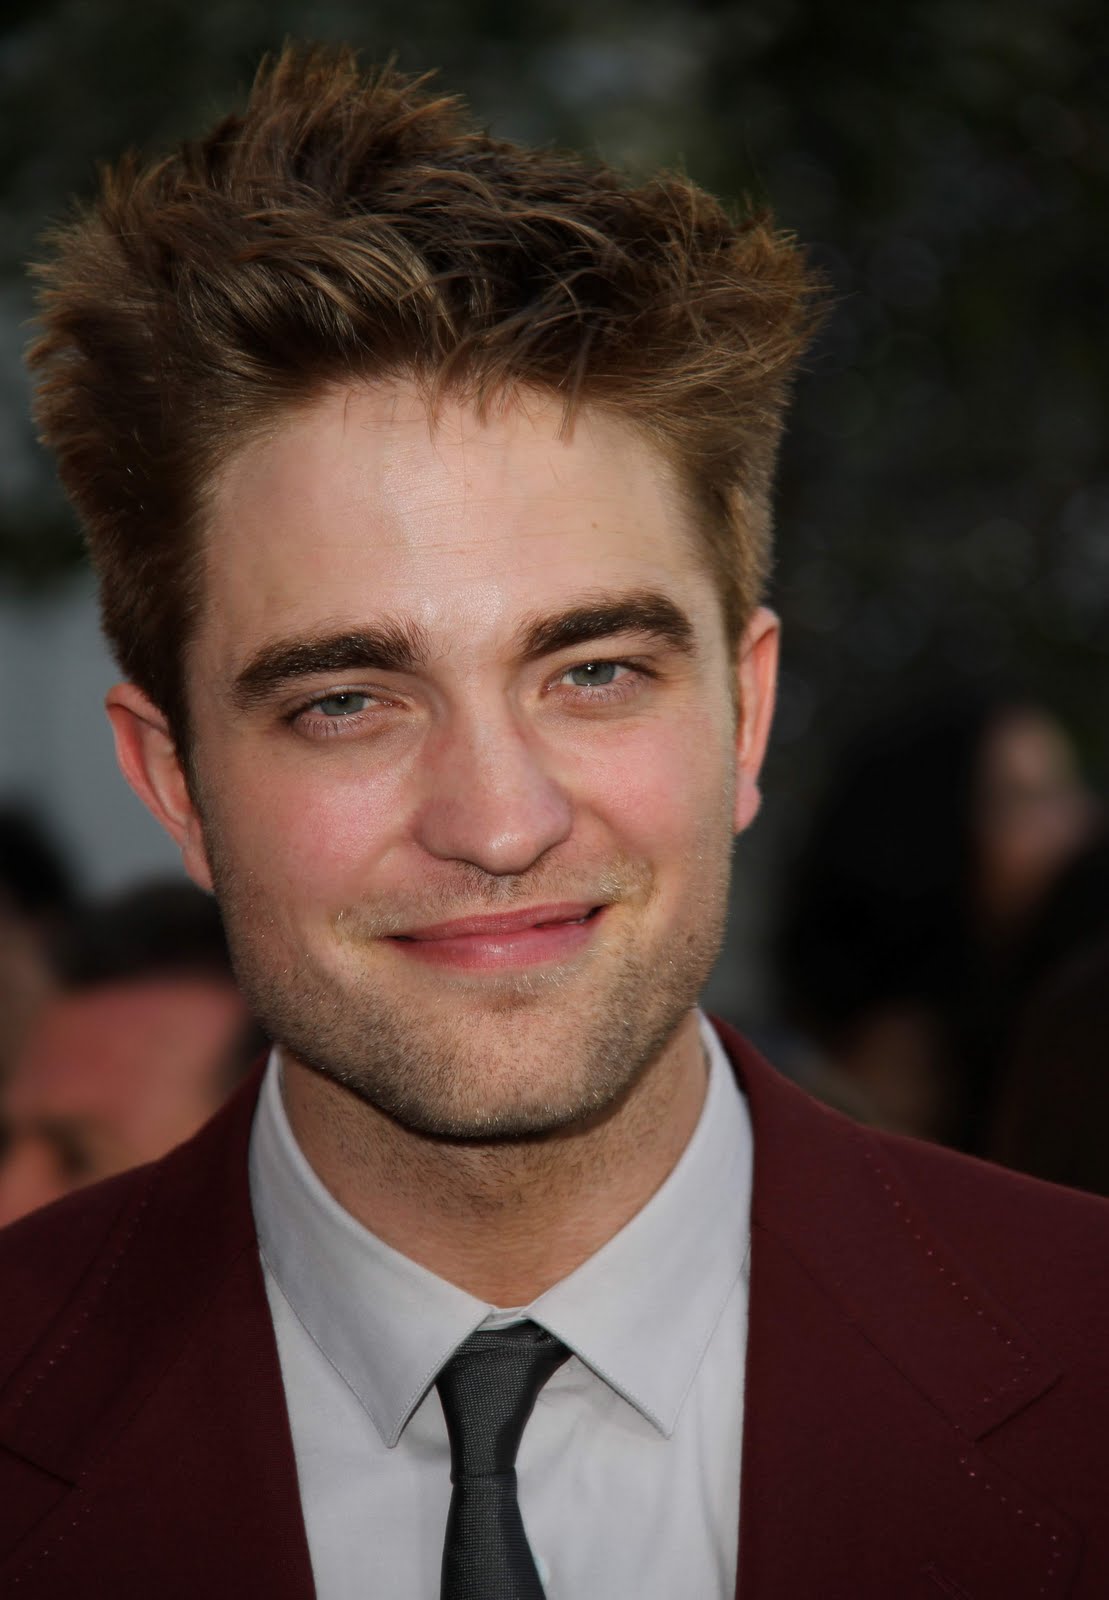 Robert Pattinson Life: Robert Pattinson is a genuine movie star